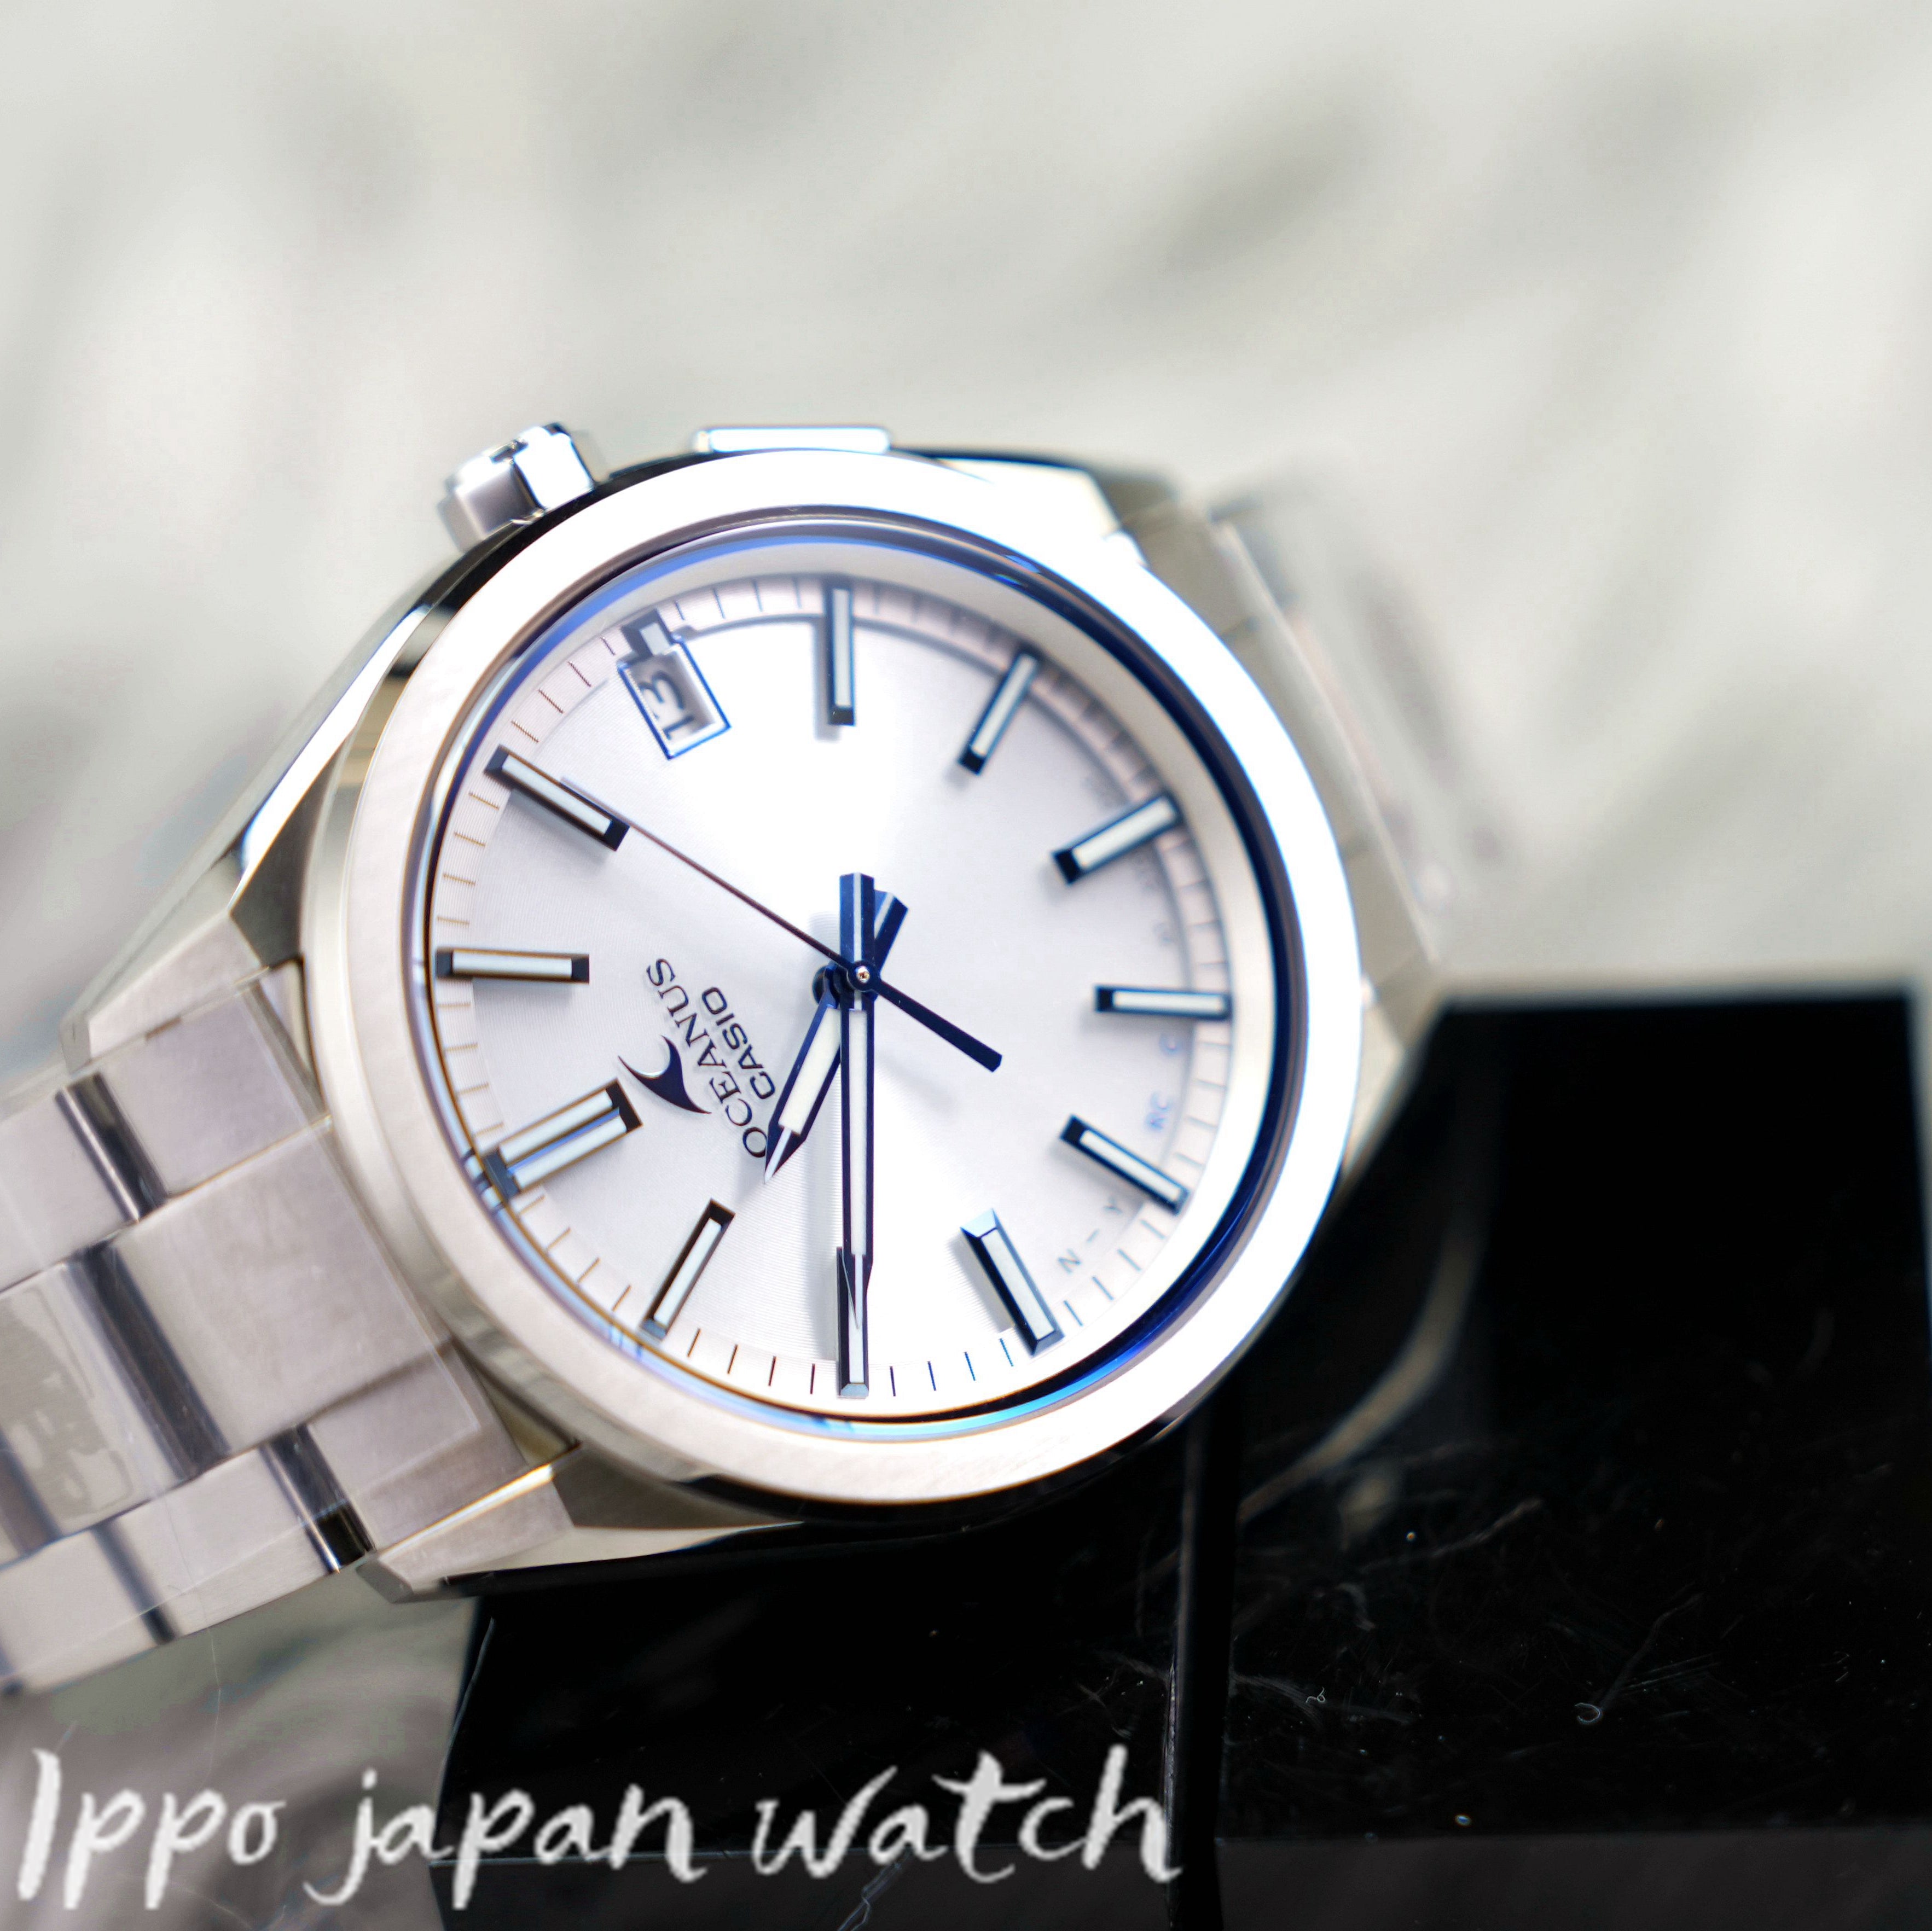 OCW-T200S-7AJF OCW-T200S-7A solar 10ATM watch re – IPPO JAPAN WATCH